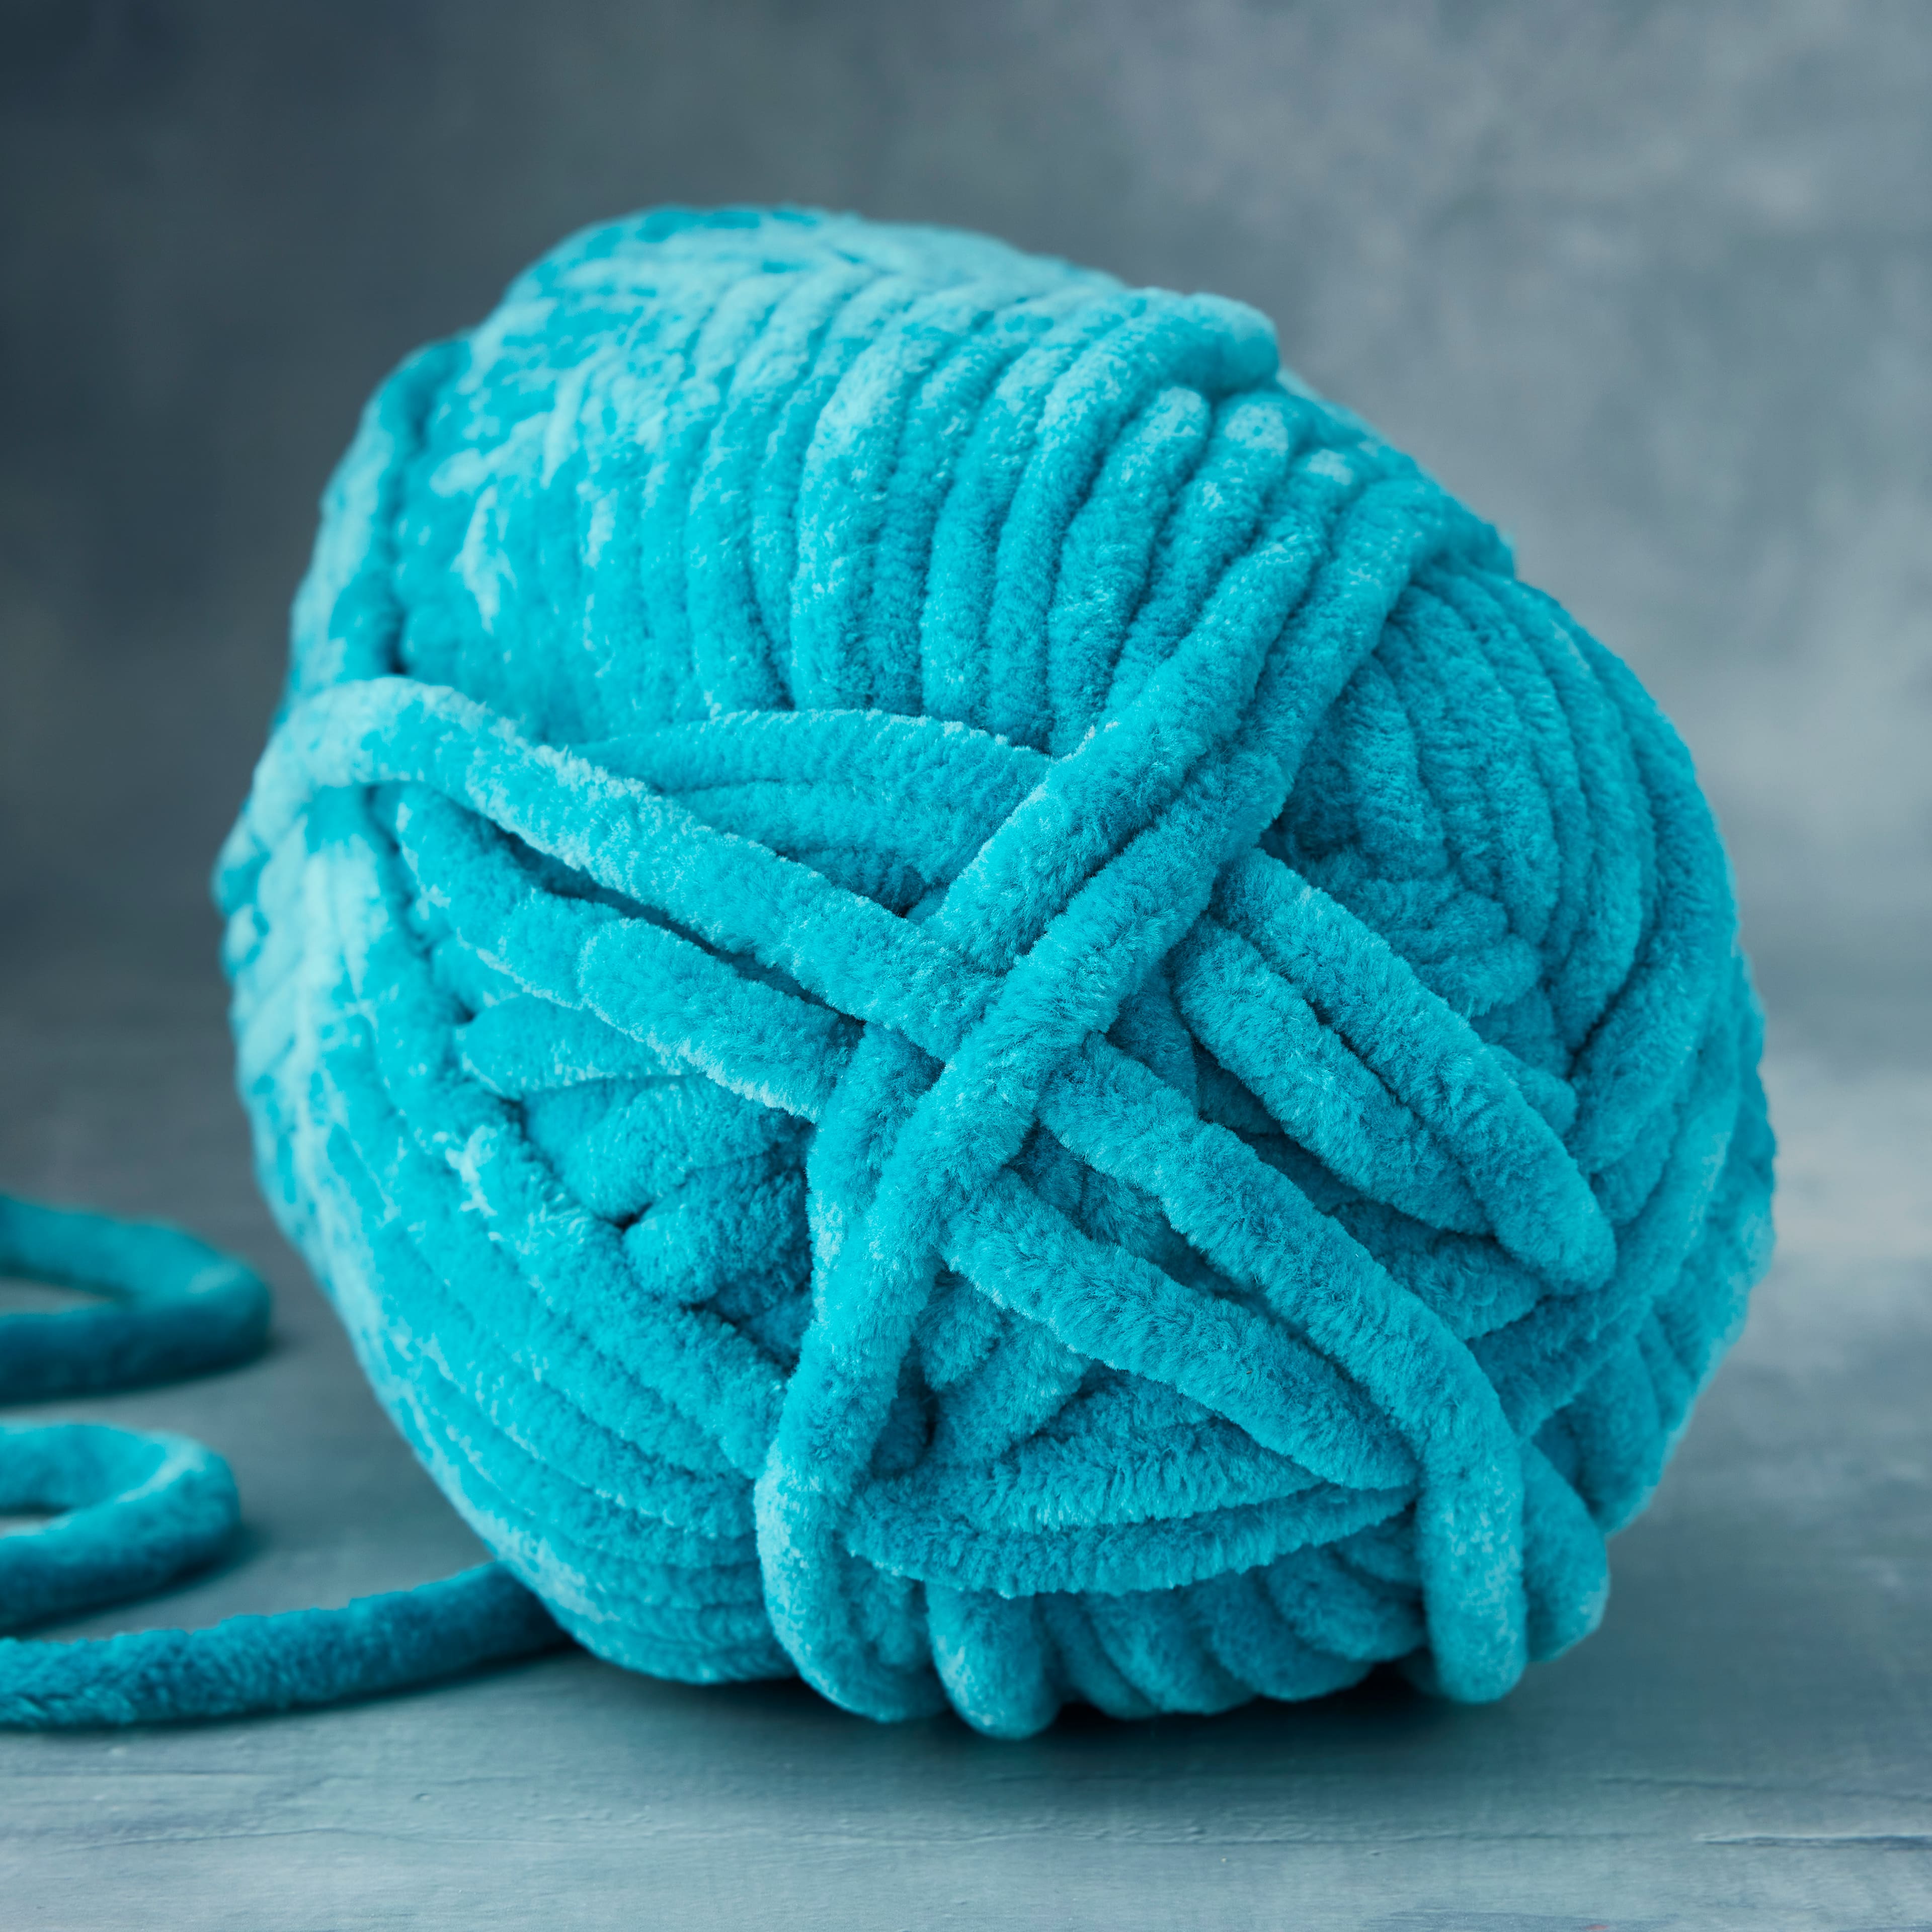 loops and threads, Art, 2 Skeins Of Sweet Snuggles Yarn Jumbo7 Free Gifts